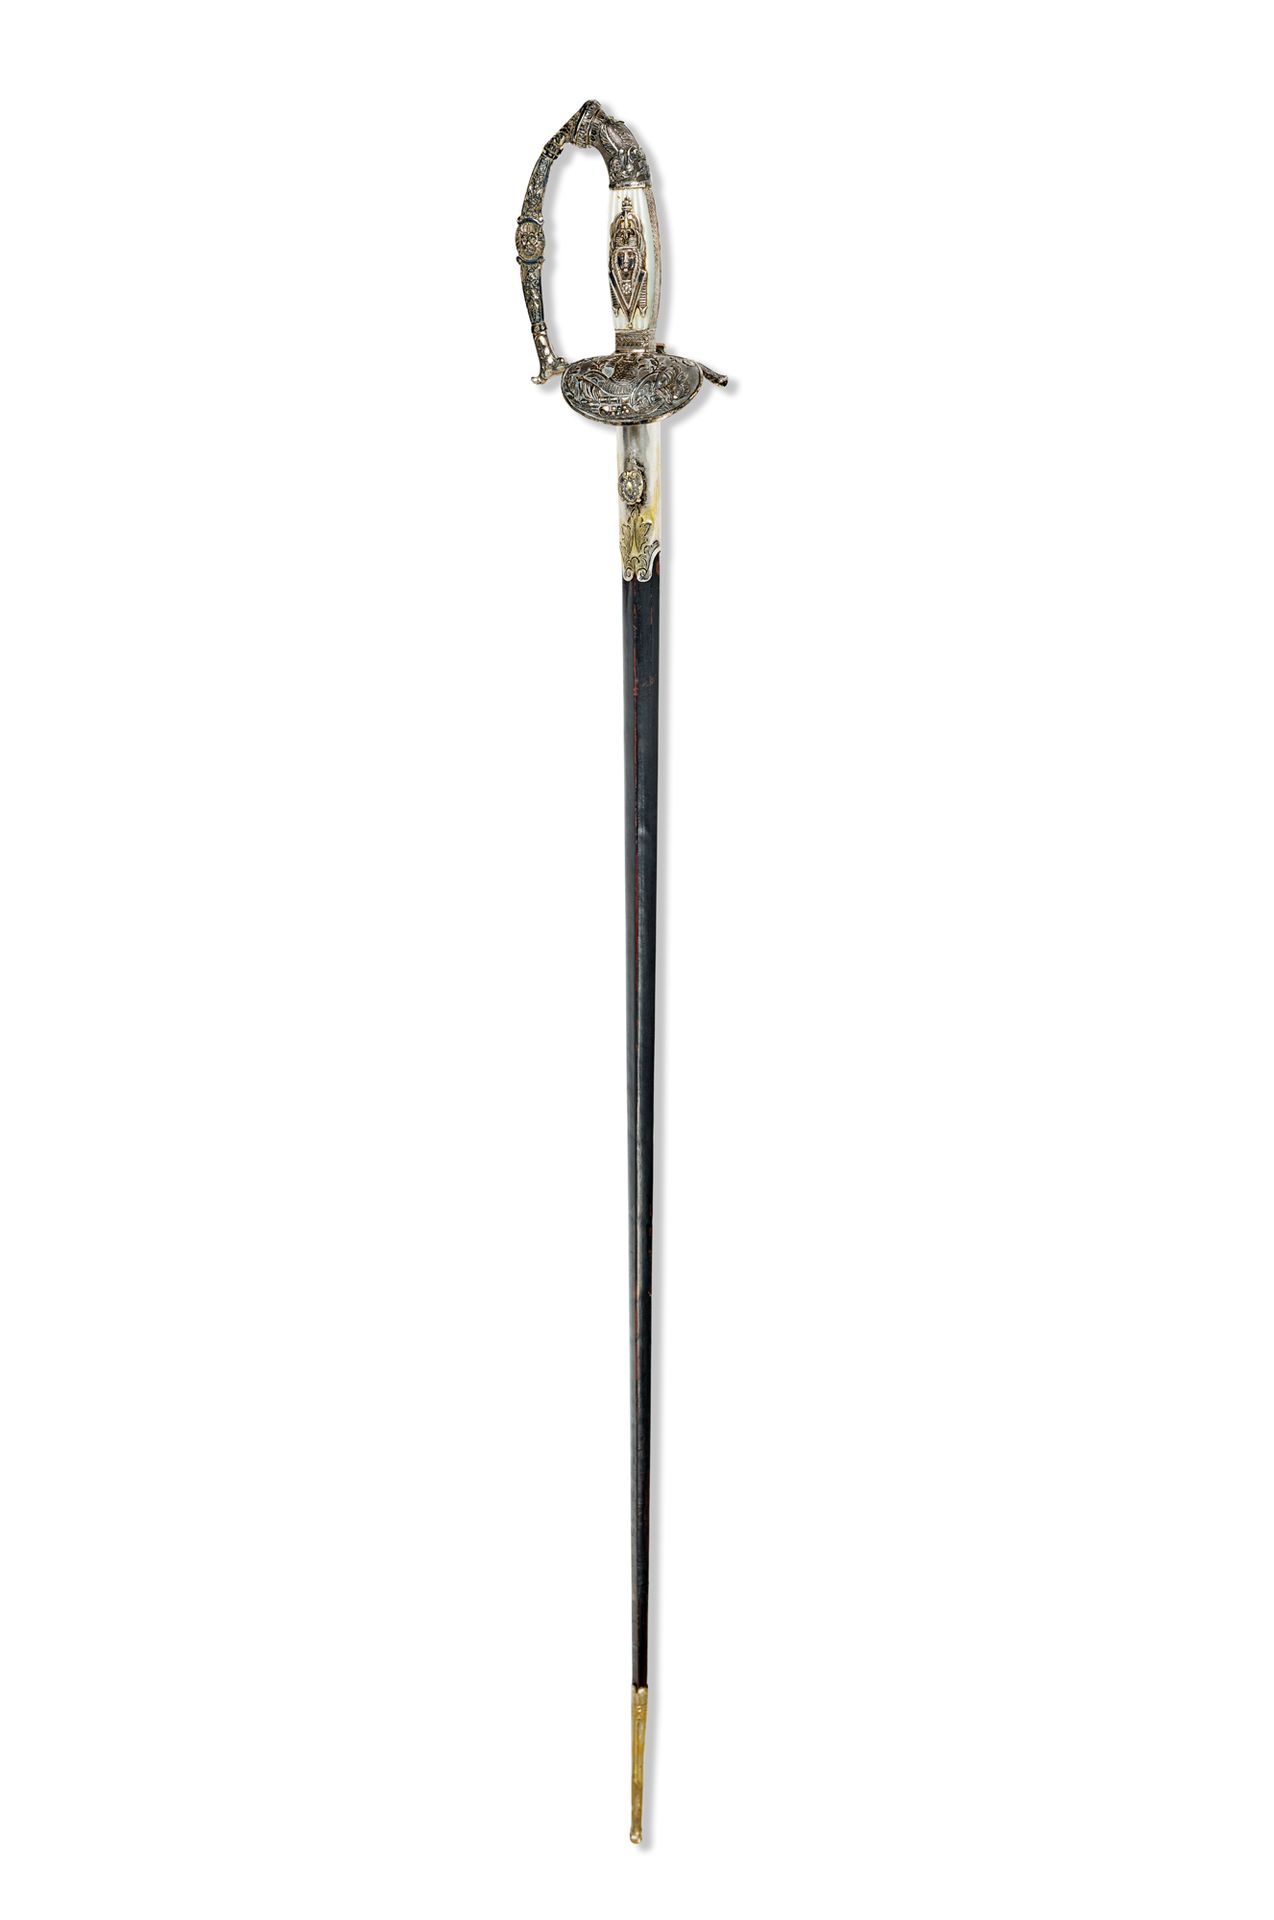 Null 
研究所成员

François-Antoine BOISSY D'ANGLAS先生的院士之剑。

极好的银质装潢，高浮雕式刻画。

标记为第一只公鸡&hellip;